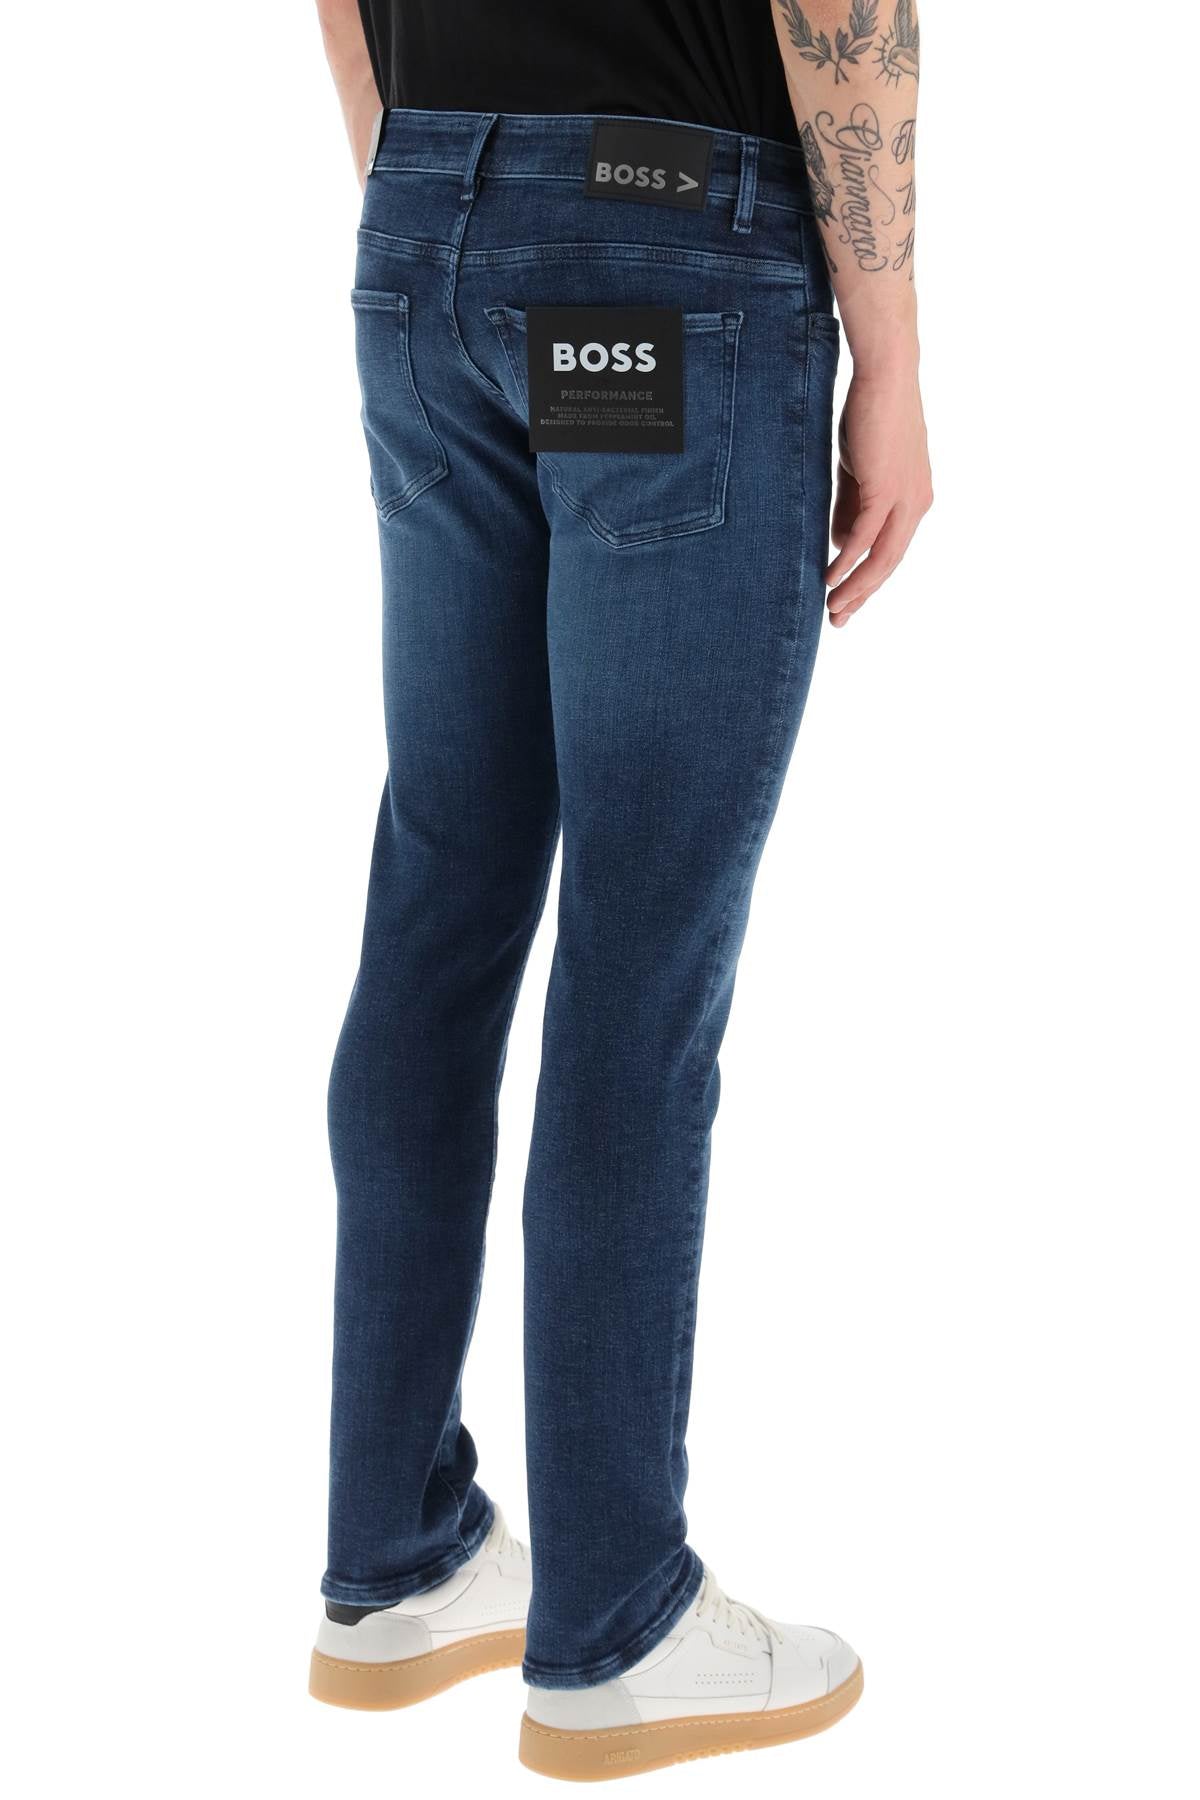 Boss delaware slim fit jeans-2